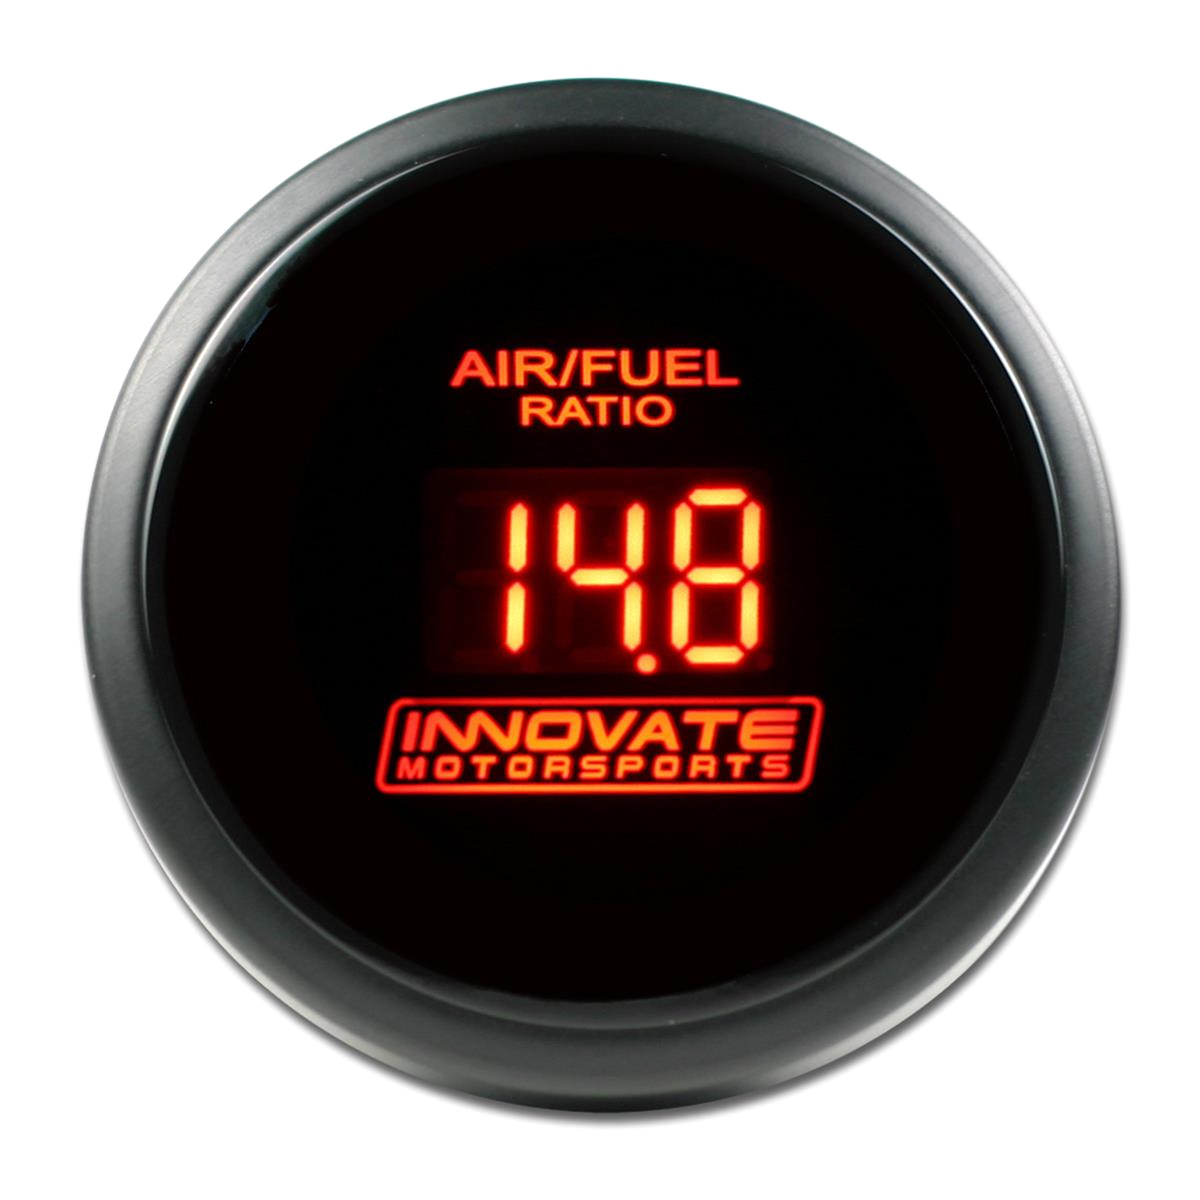 Innovate Motorsports 37940 Air-Fuel Ratio Gauge, DB, Wideband, 8:1-18:1 AFR, Electric, Digital, 2-1/16 in Diameter, Black Face Red LED, Gauge Only, Each